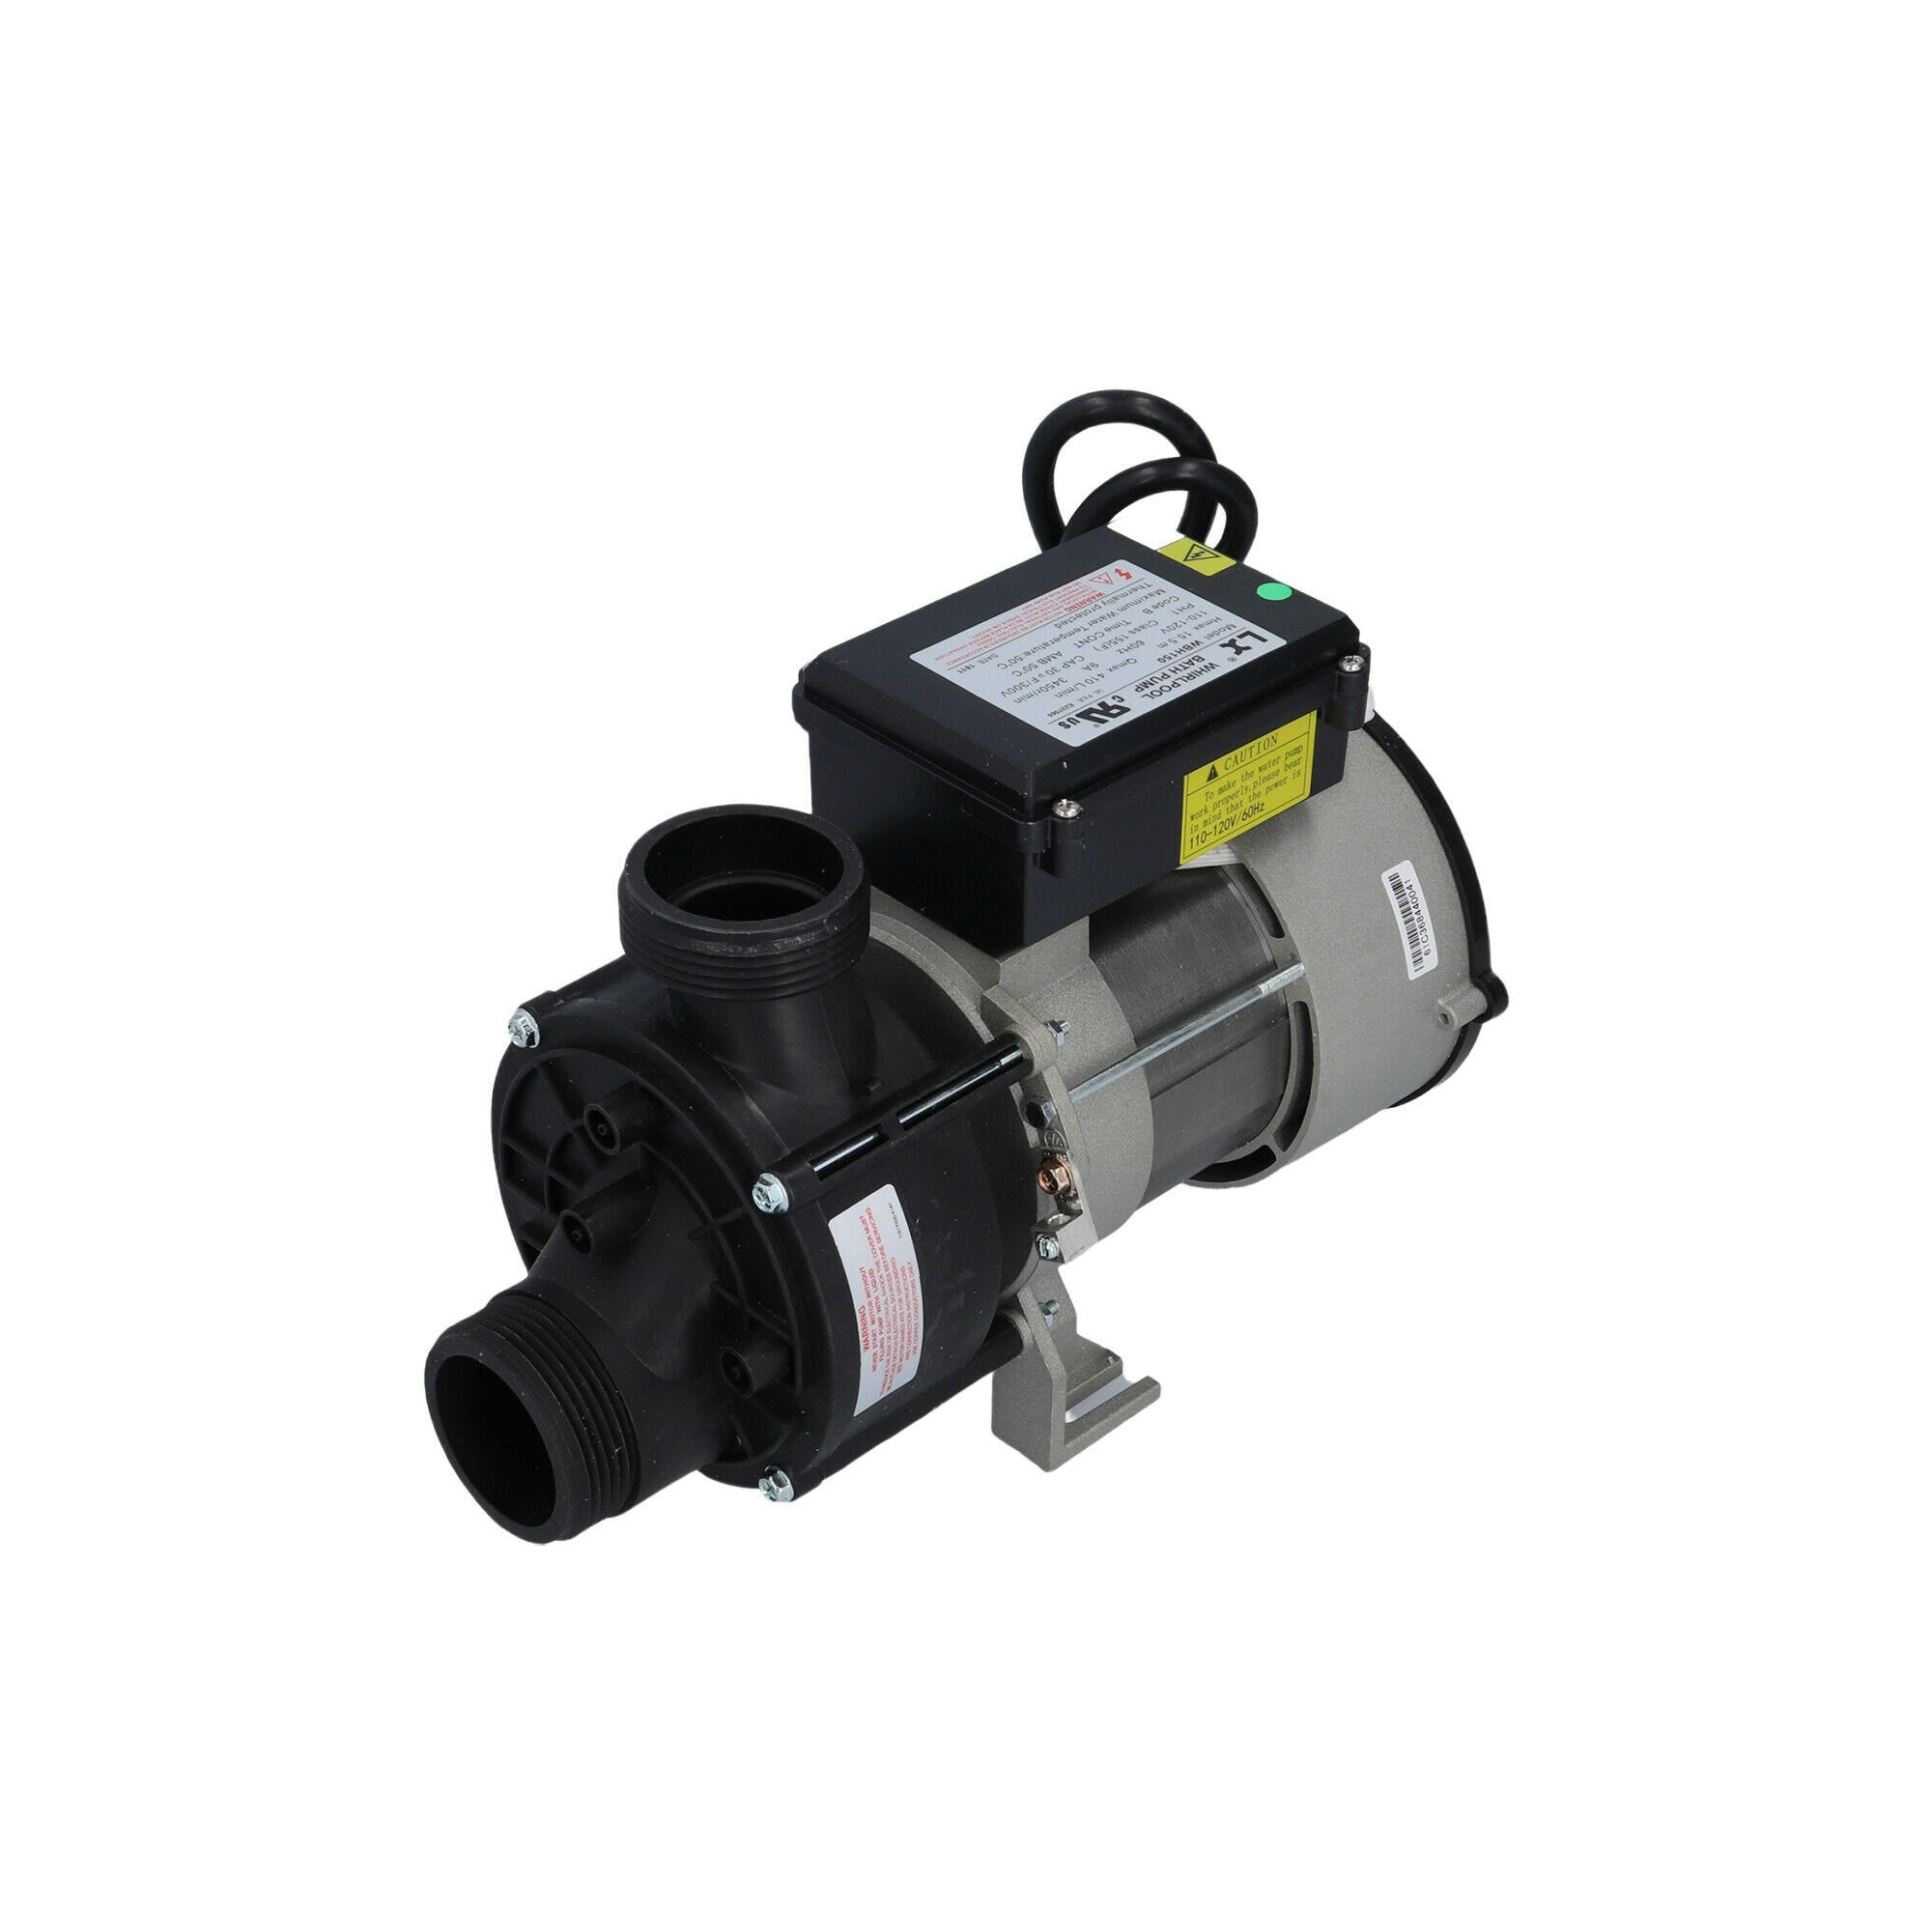 Kohler Proflex Replacement Bath Pump, 9 amp, Air Switch, Cord (321JF10)